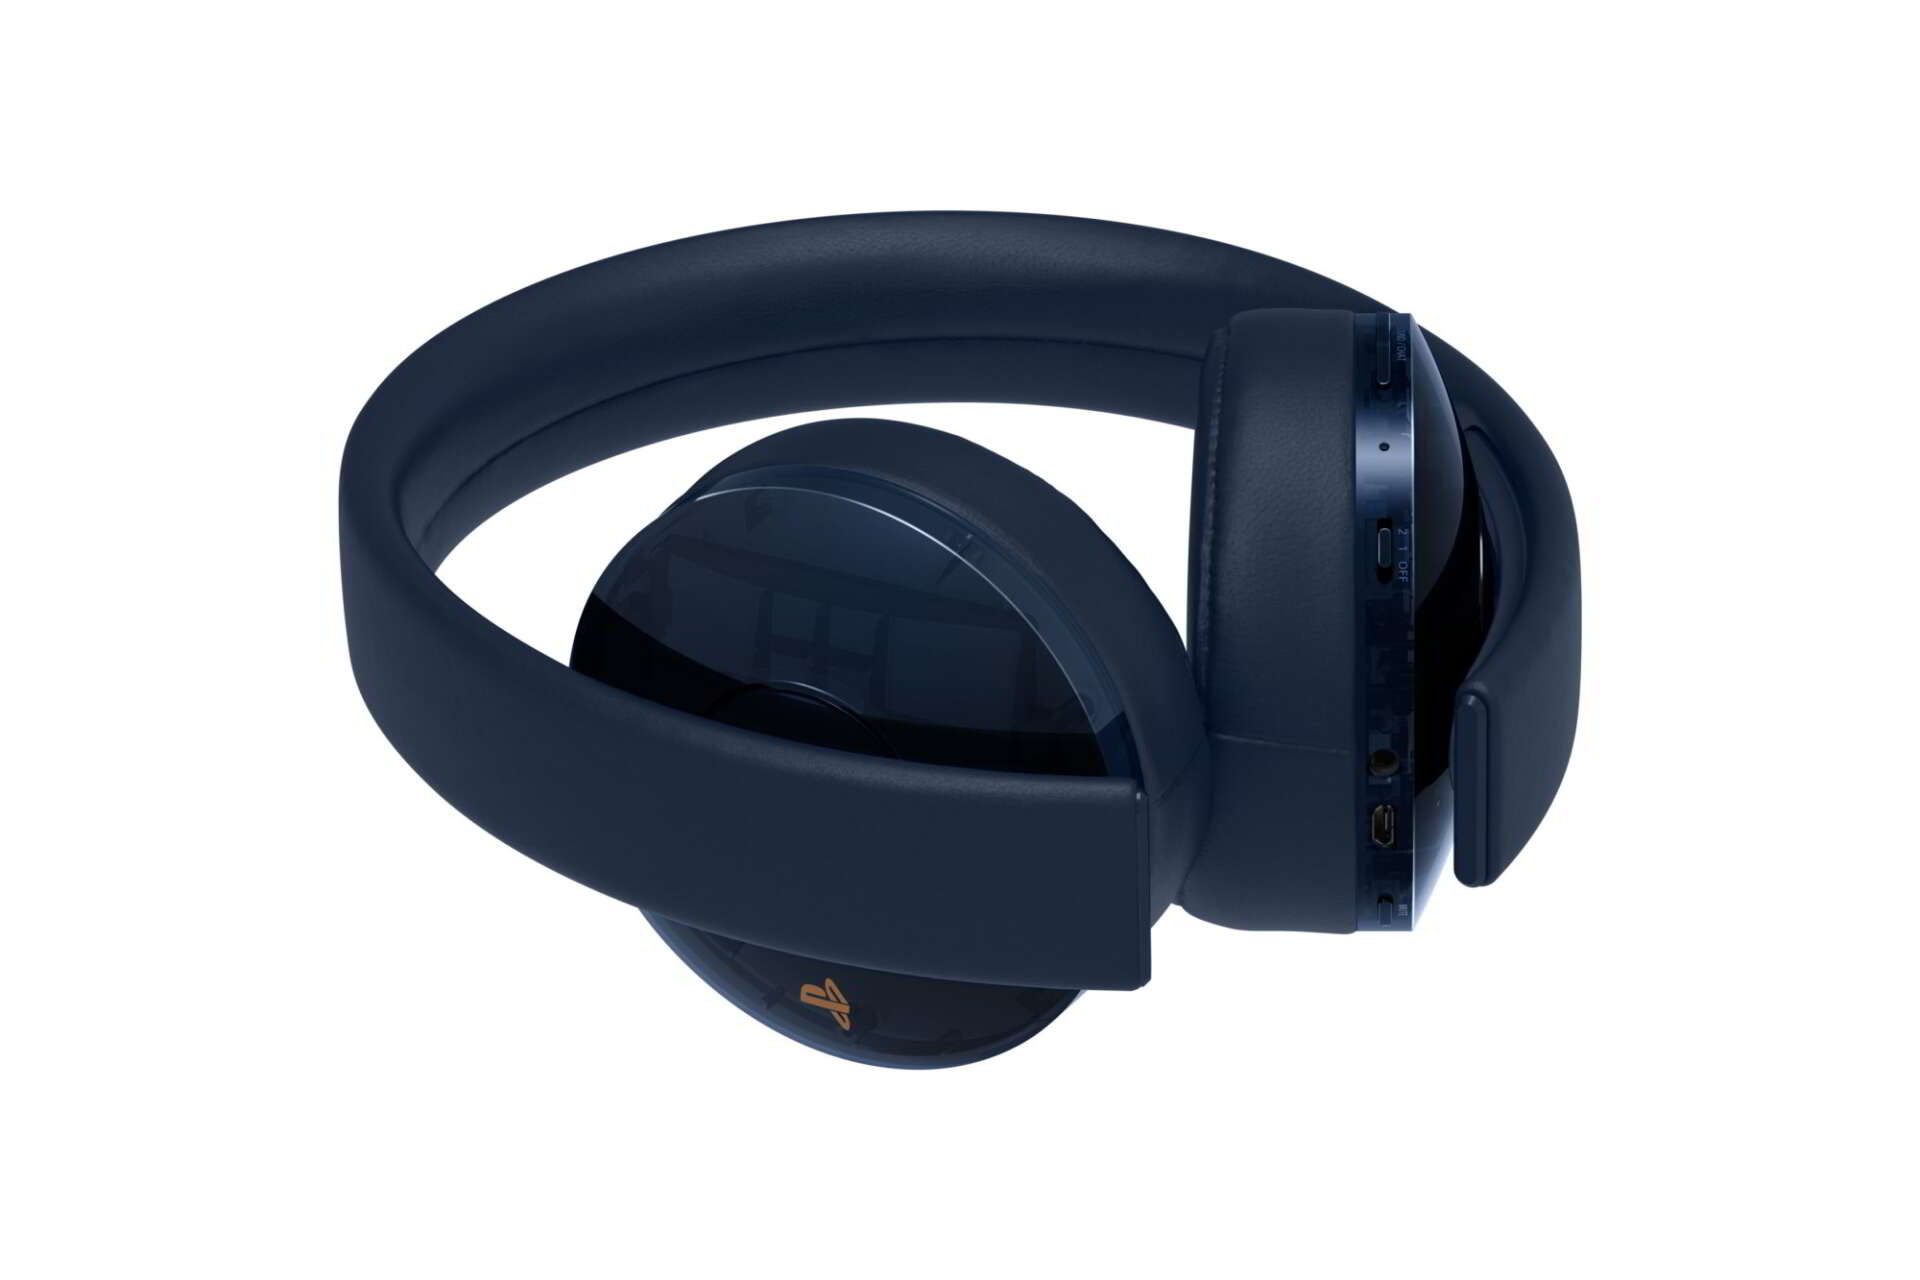 Sony 500m limited edition 7.1 surround gaming headset sötétkék